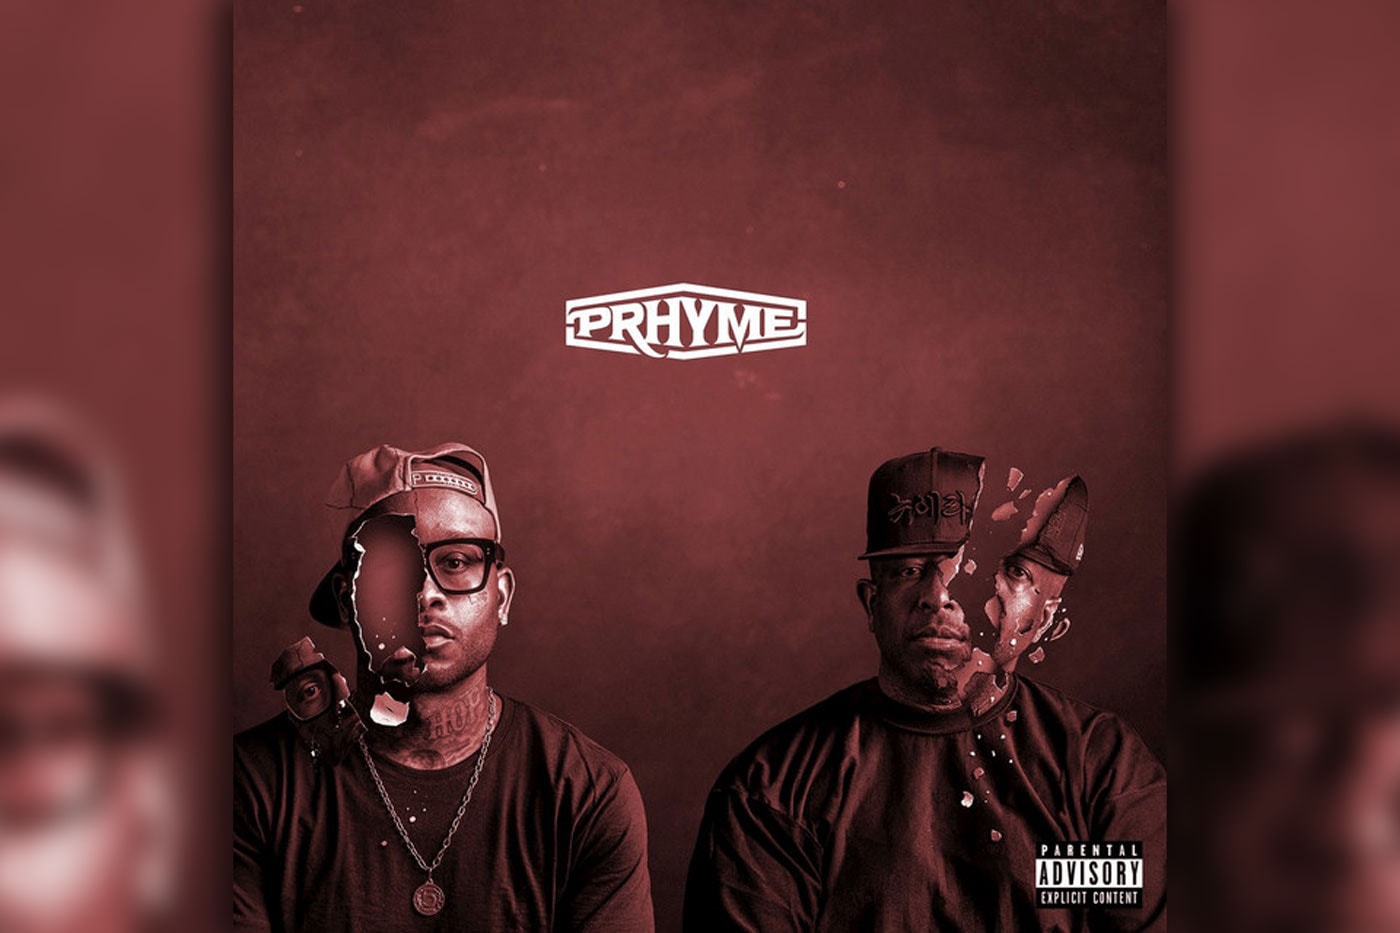 PRhyme (Royce Da 5'9" & DJ Premier) Release New Track "Golden Era" featuring Joey Bada$$